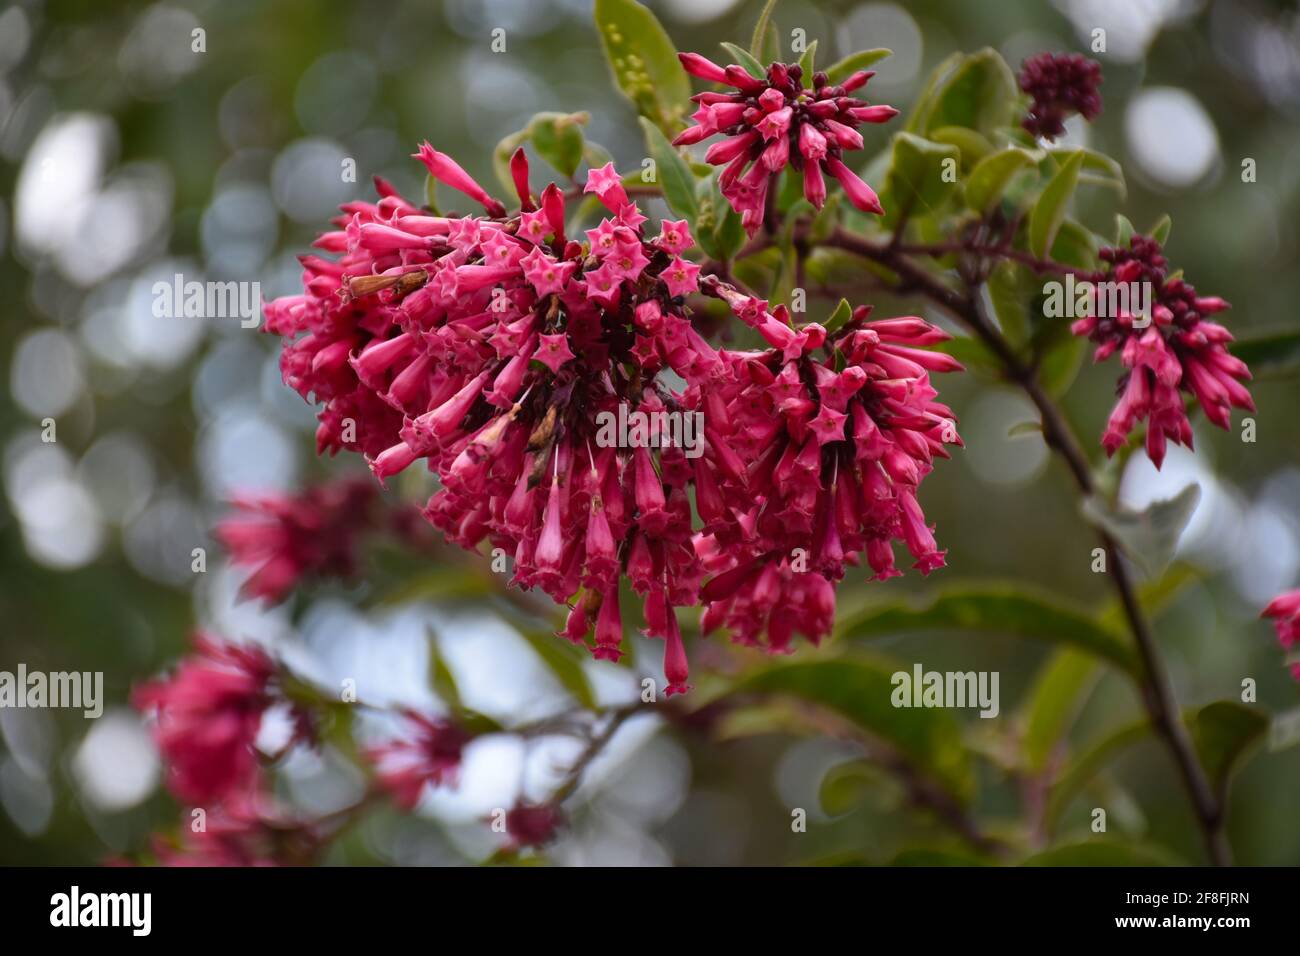 Bunch of Jessamine red Cestrum flower Stock Photo